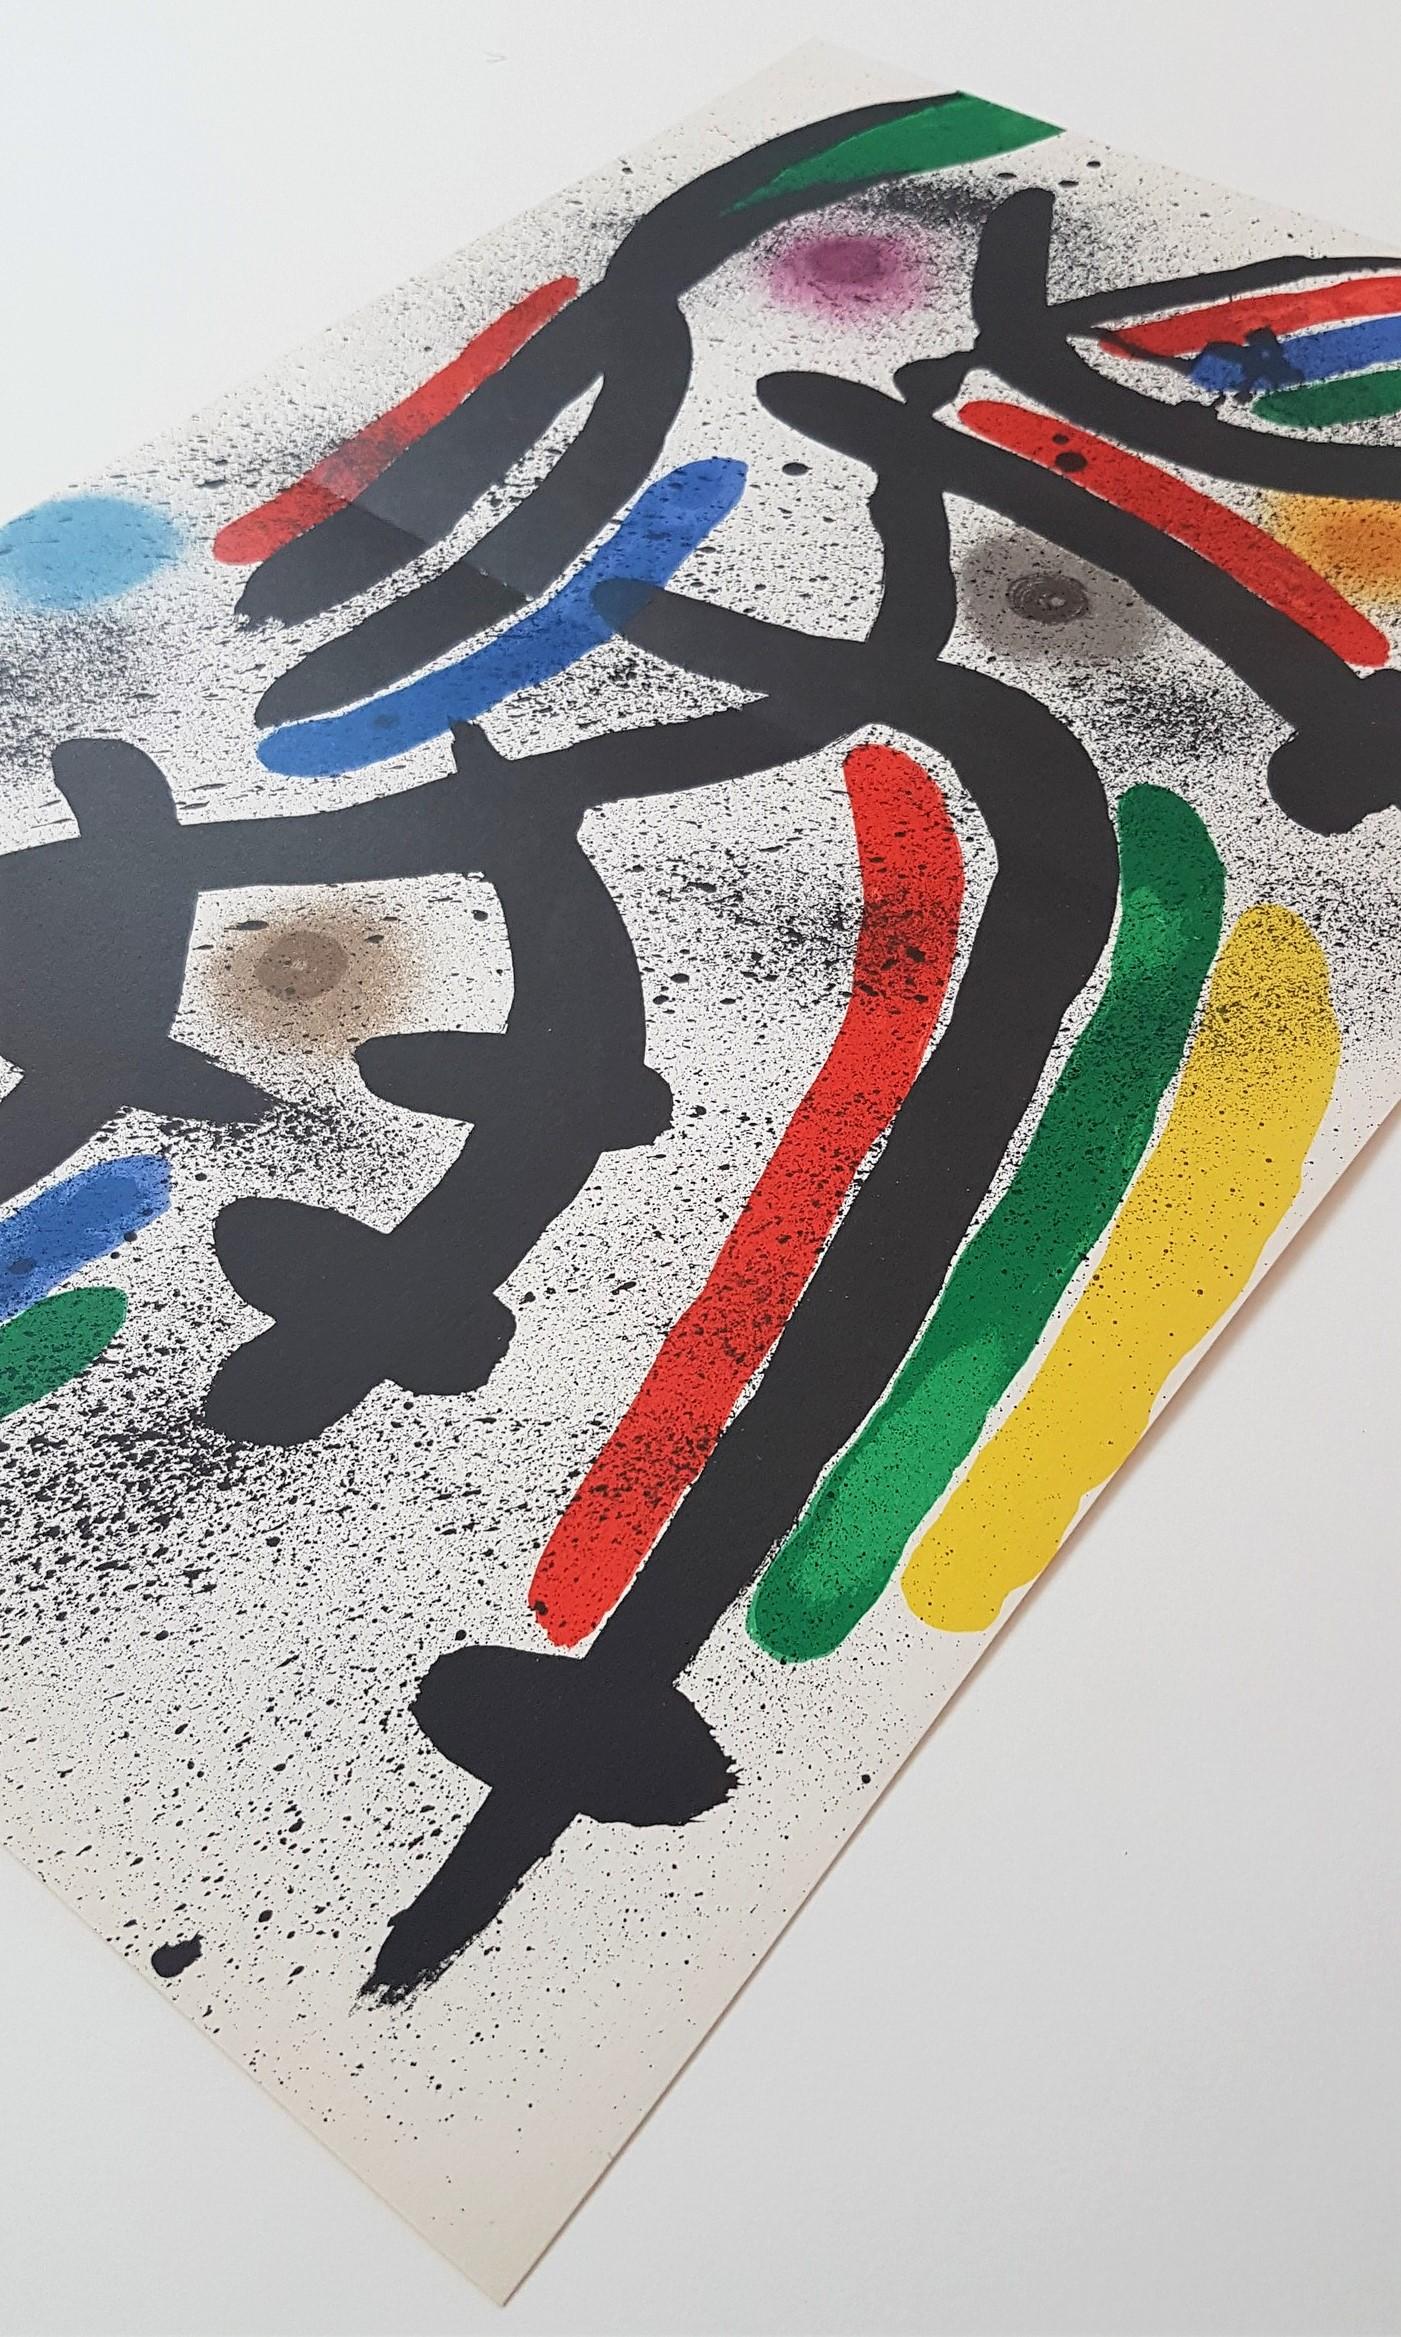 Joan Miró
Litografia Original IX
Color Lithograph
Year: 1975
Size: 25 × 9.6 inches
Catalogue Raisonné: Queneau, Miro Lithographe II, 1952-1963, p.38
Publisher: Maeght Editeur, Paris, France 
With centerfold as issued
Verso: Typographically